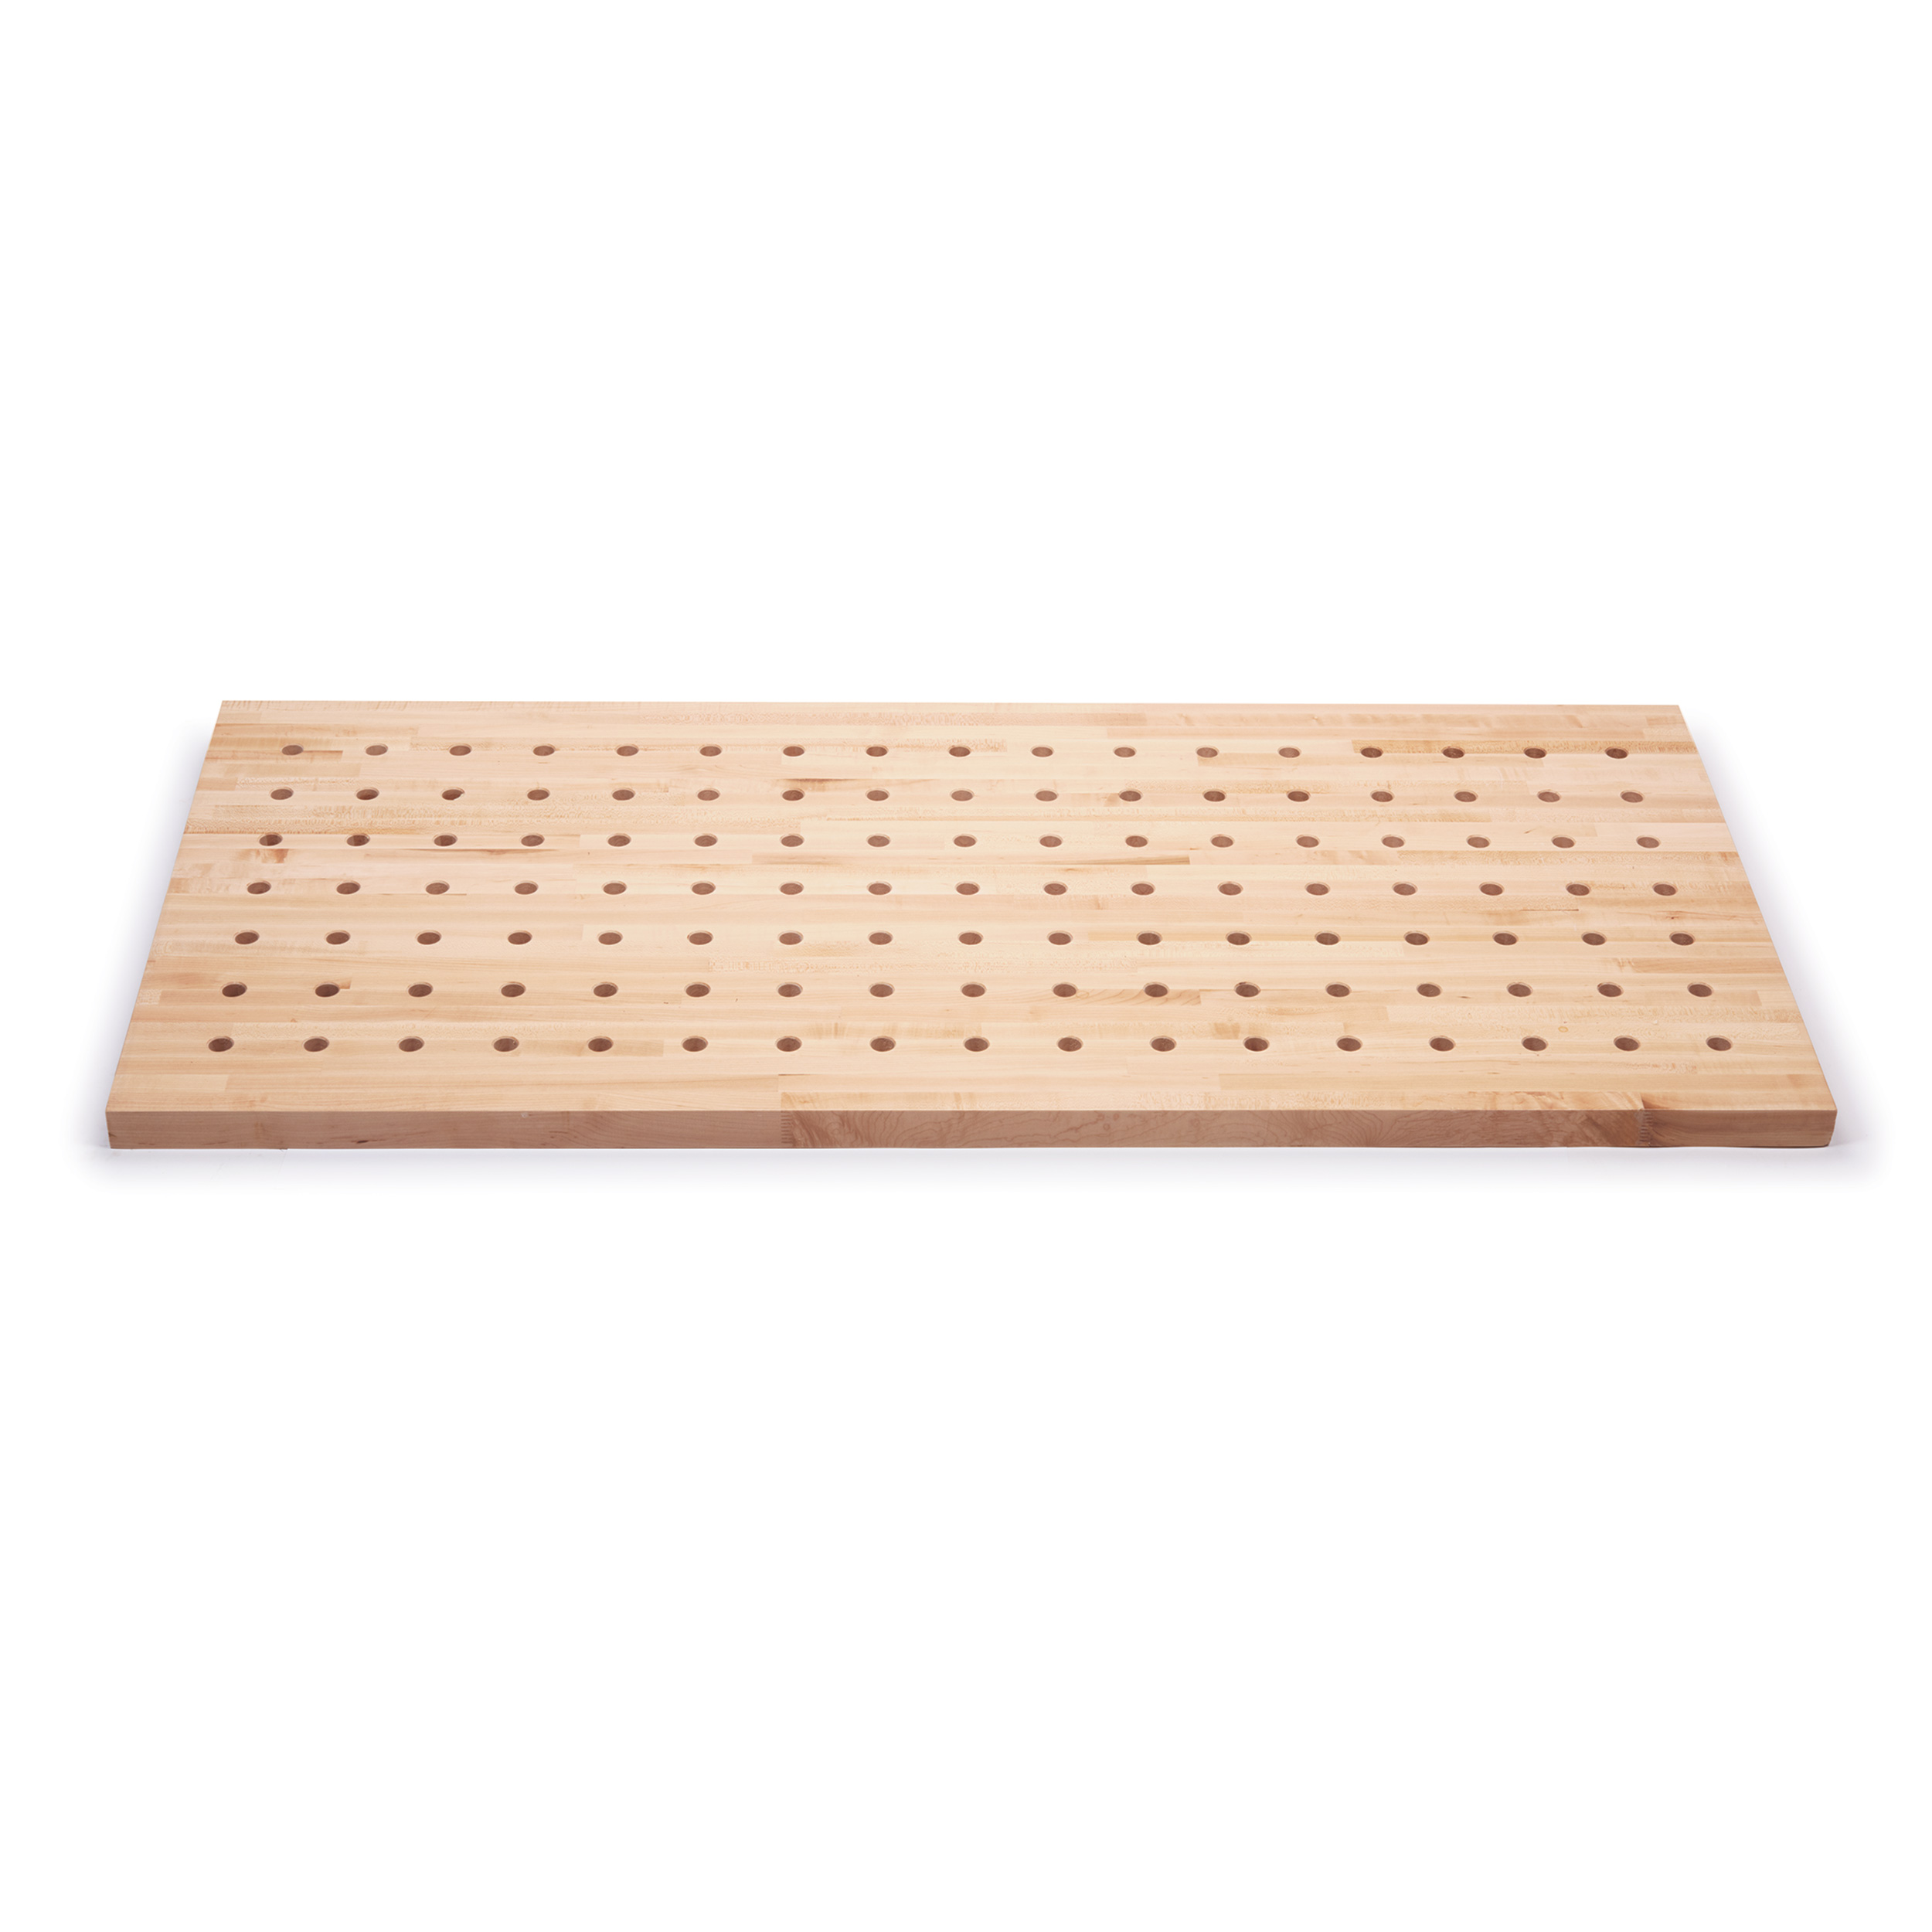 54x25 Premium Hardwood Peg Table Top